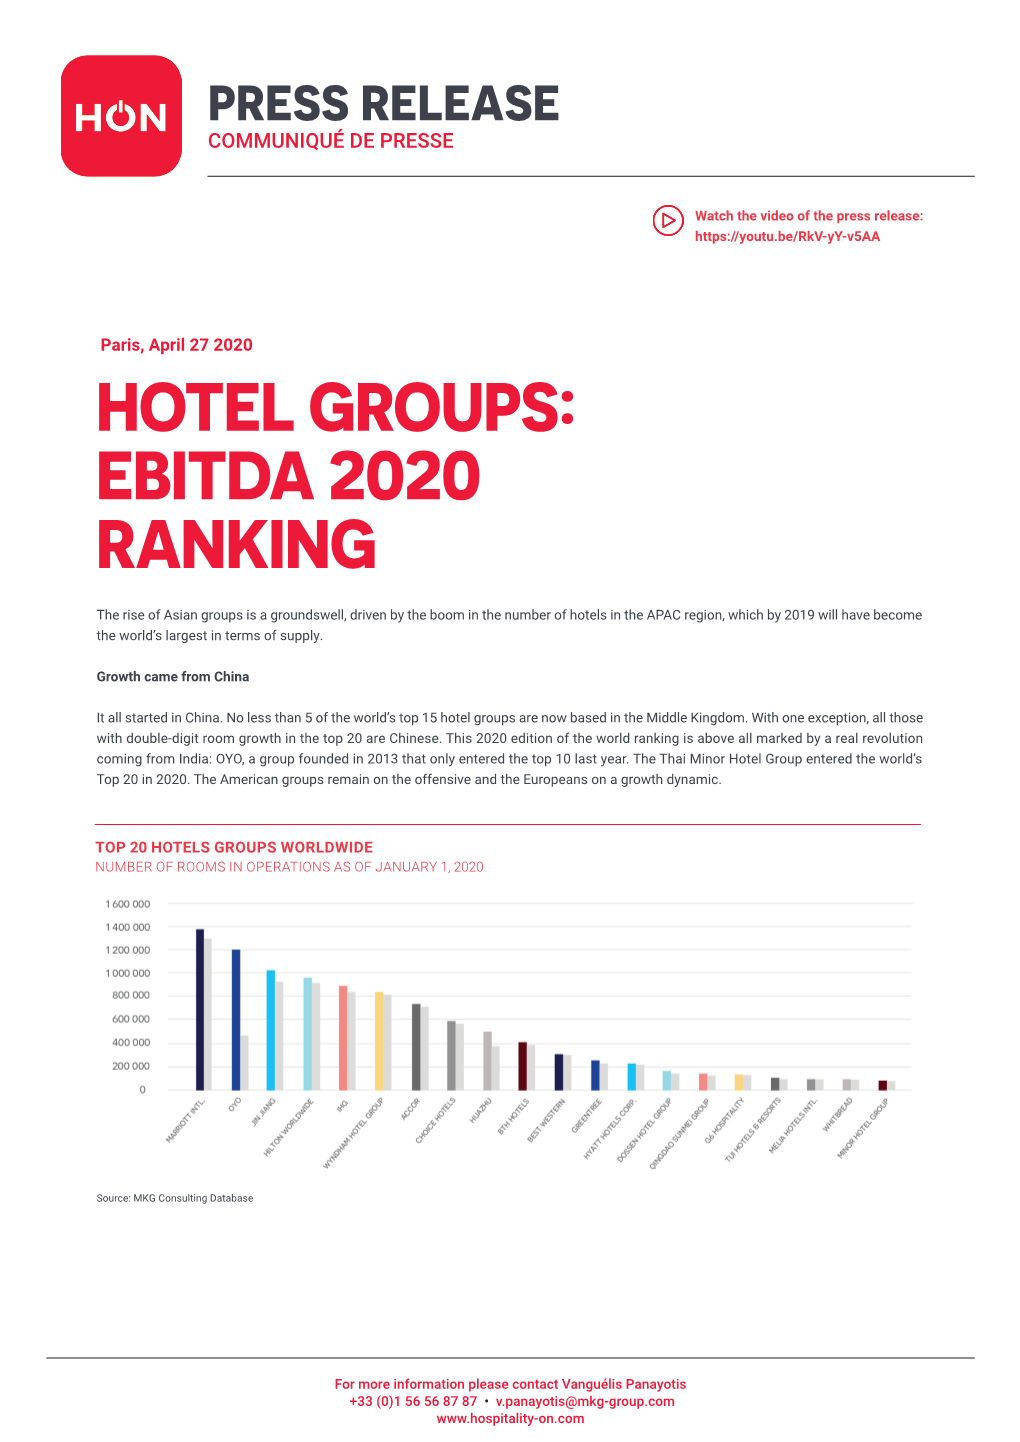 Hotel Groups: Ebitda 2020 Ranking